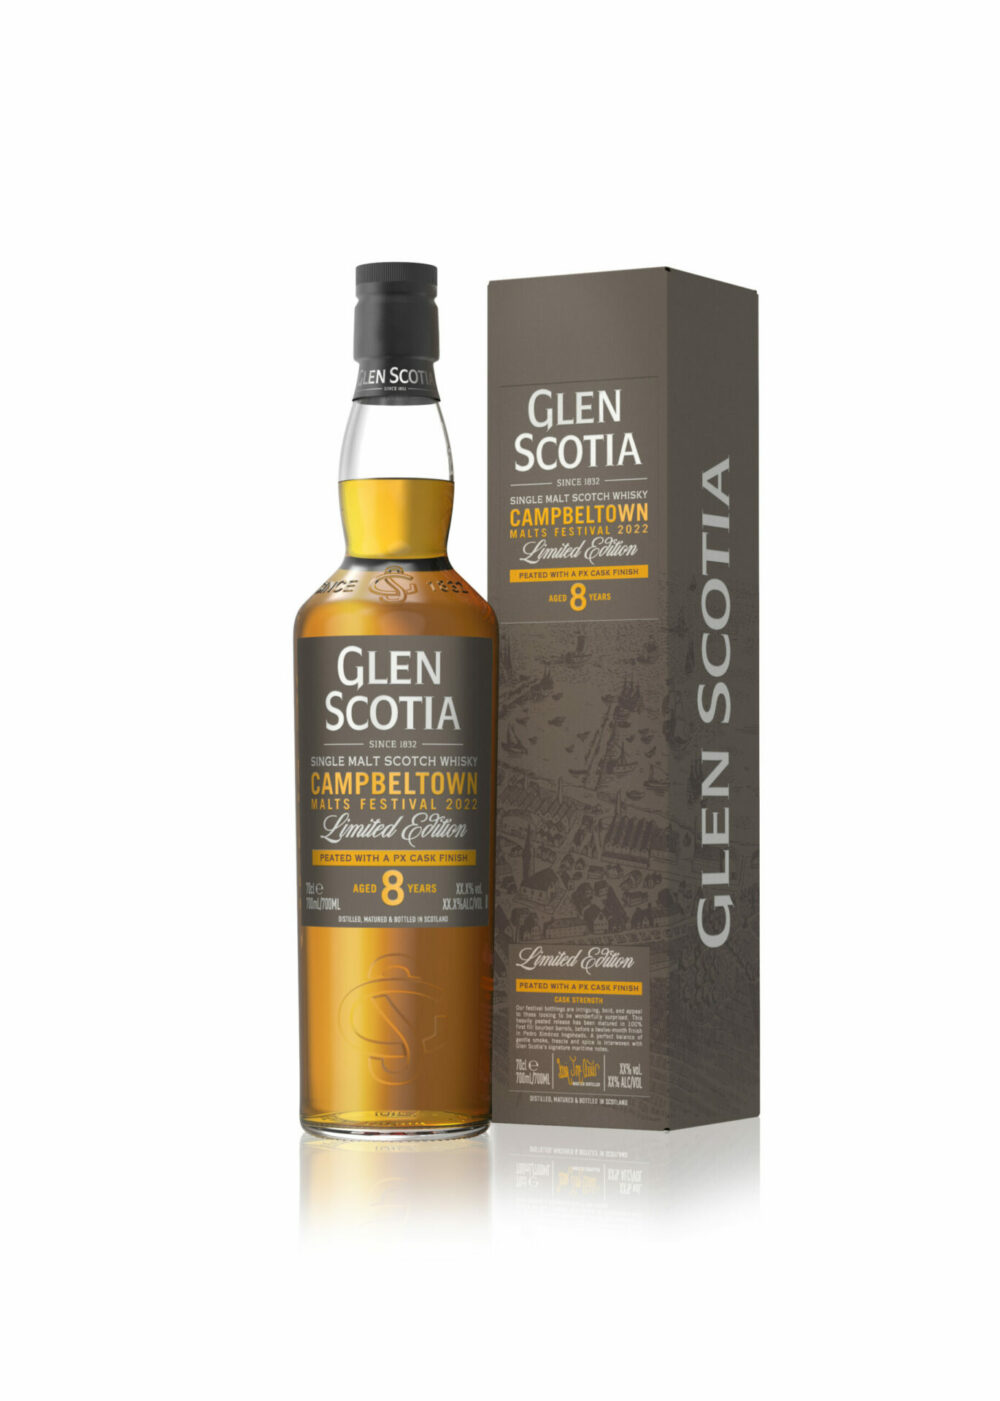 A Bottle Of Glen Scotia Single Malt Scotch Whisky From Campbeltown Malts Festival